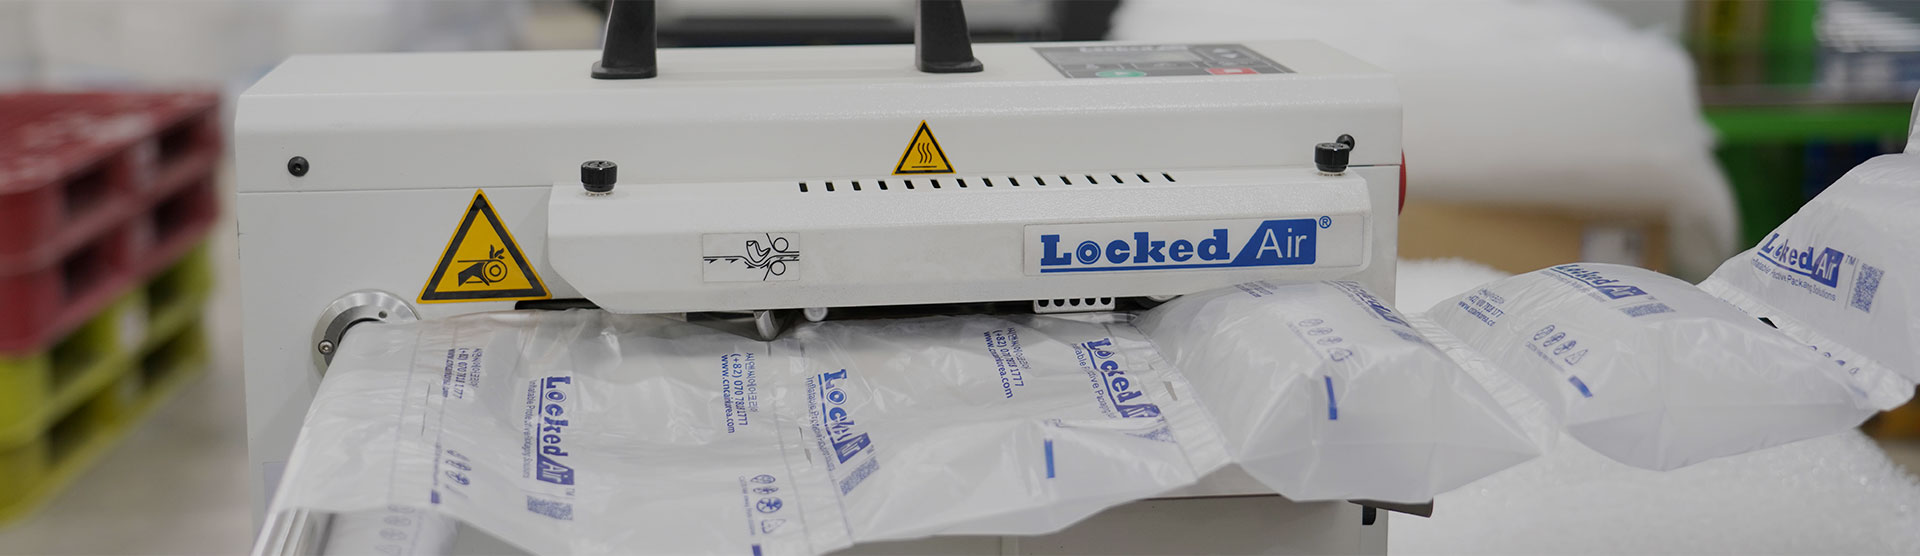 LockedPaper V2 Paper Void-Fill Machine